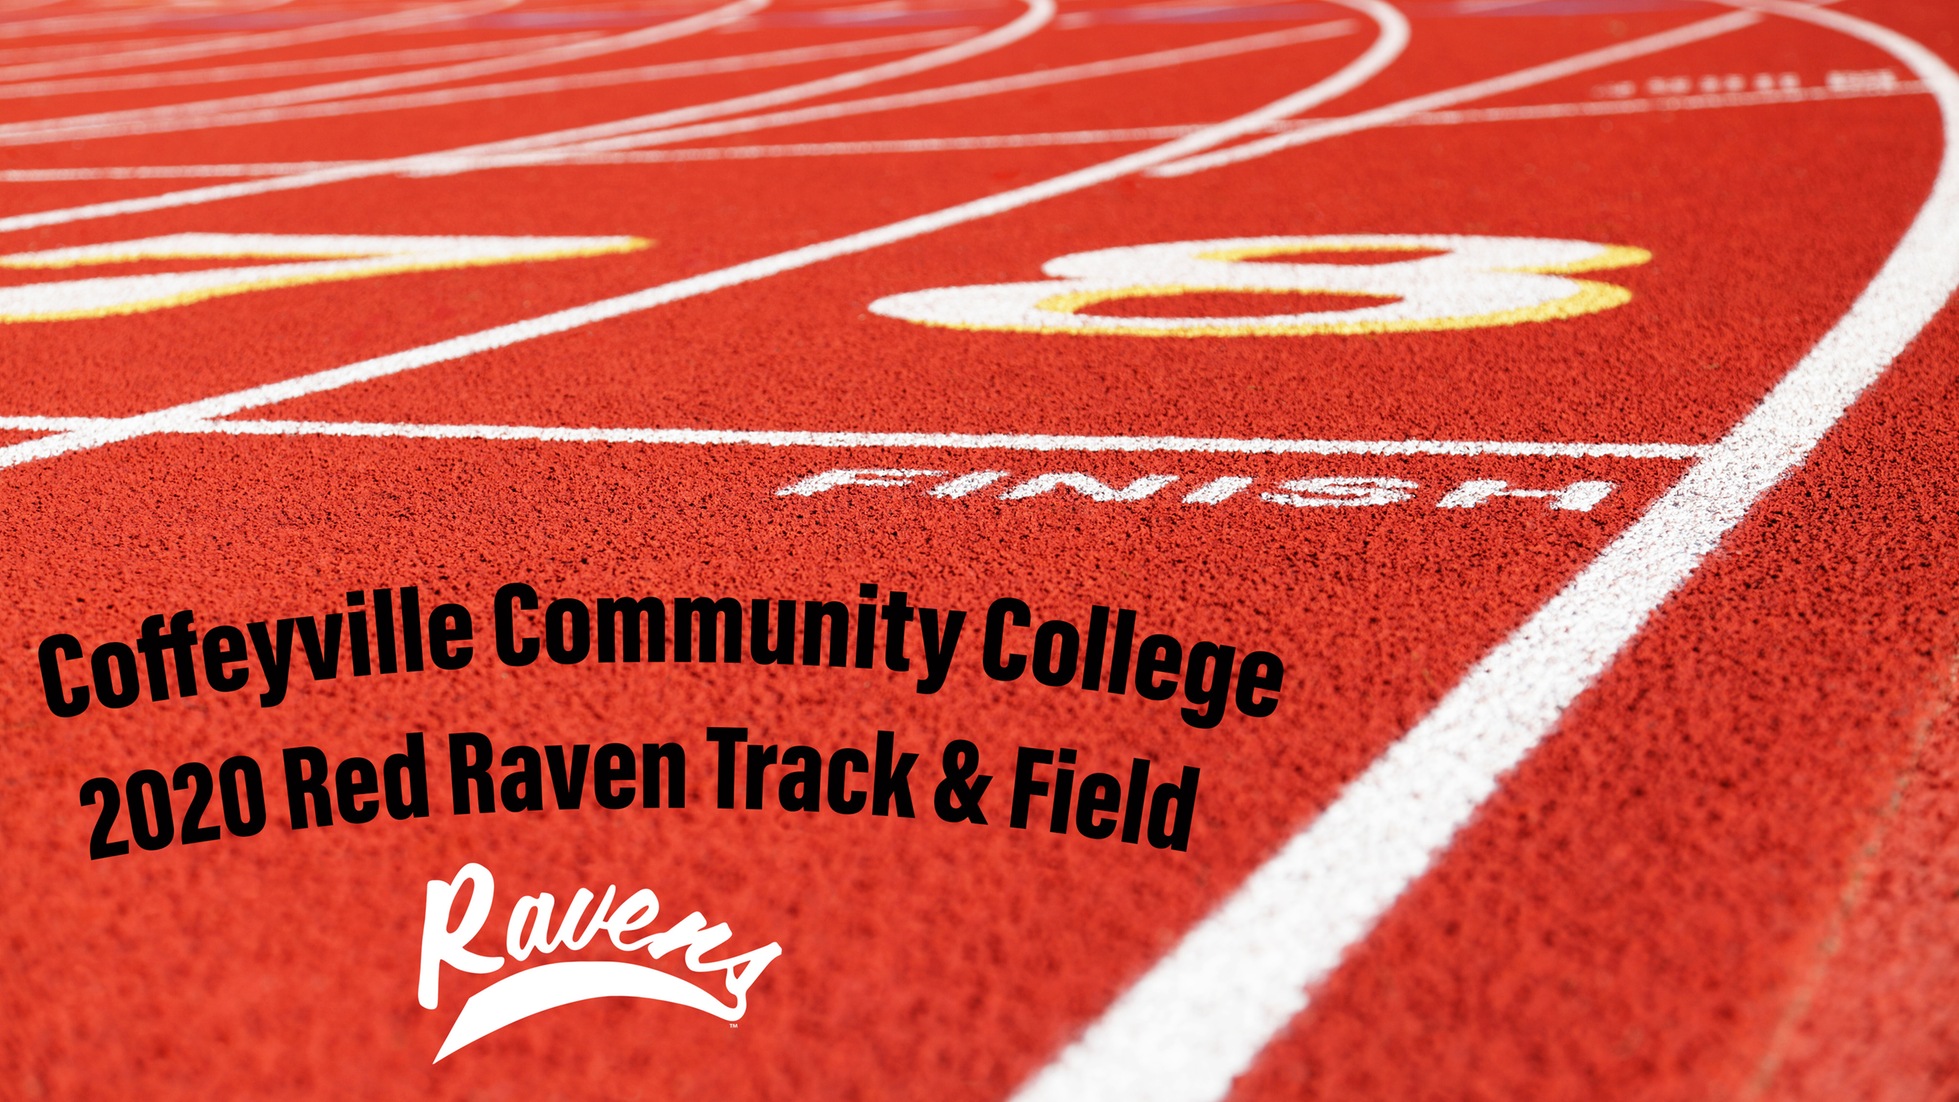 Red Raven Track & Field Set 42 Personal Best & 1 School Record Over 3 Meet Period Last Week